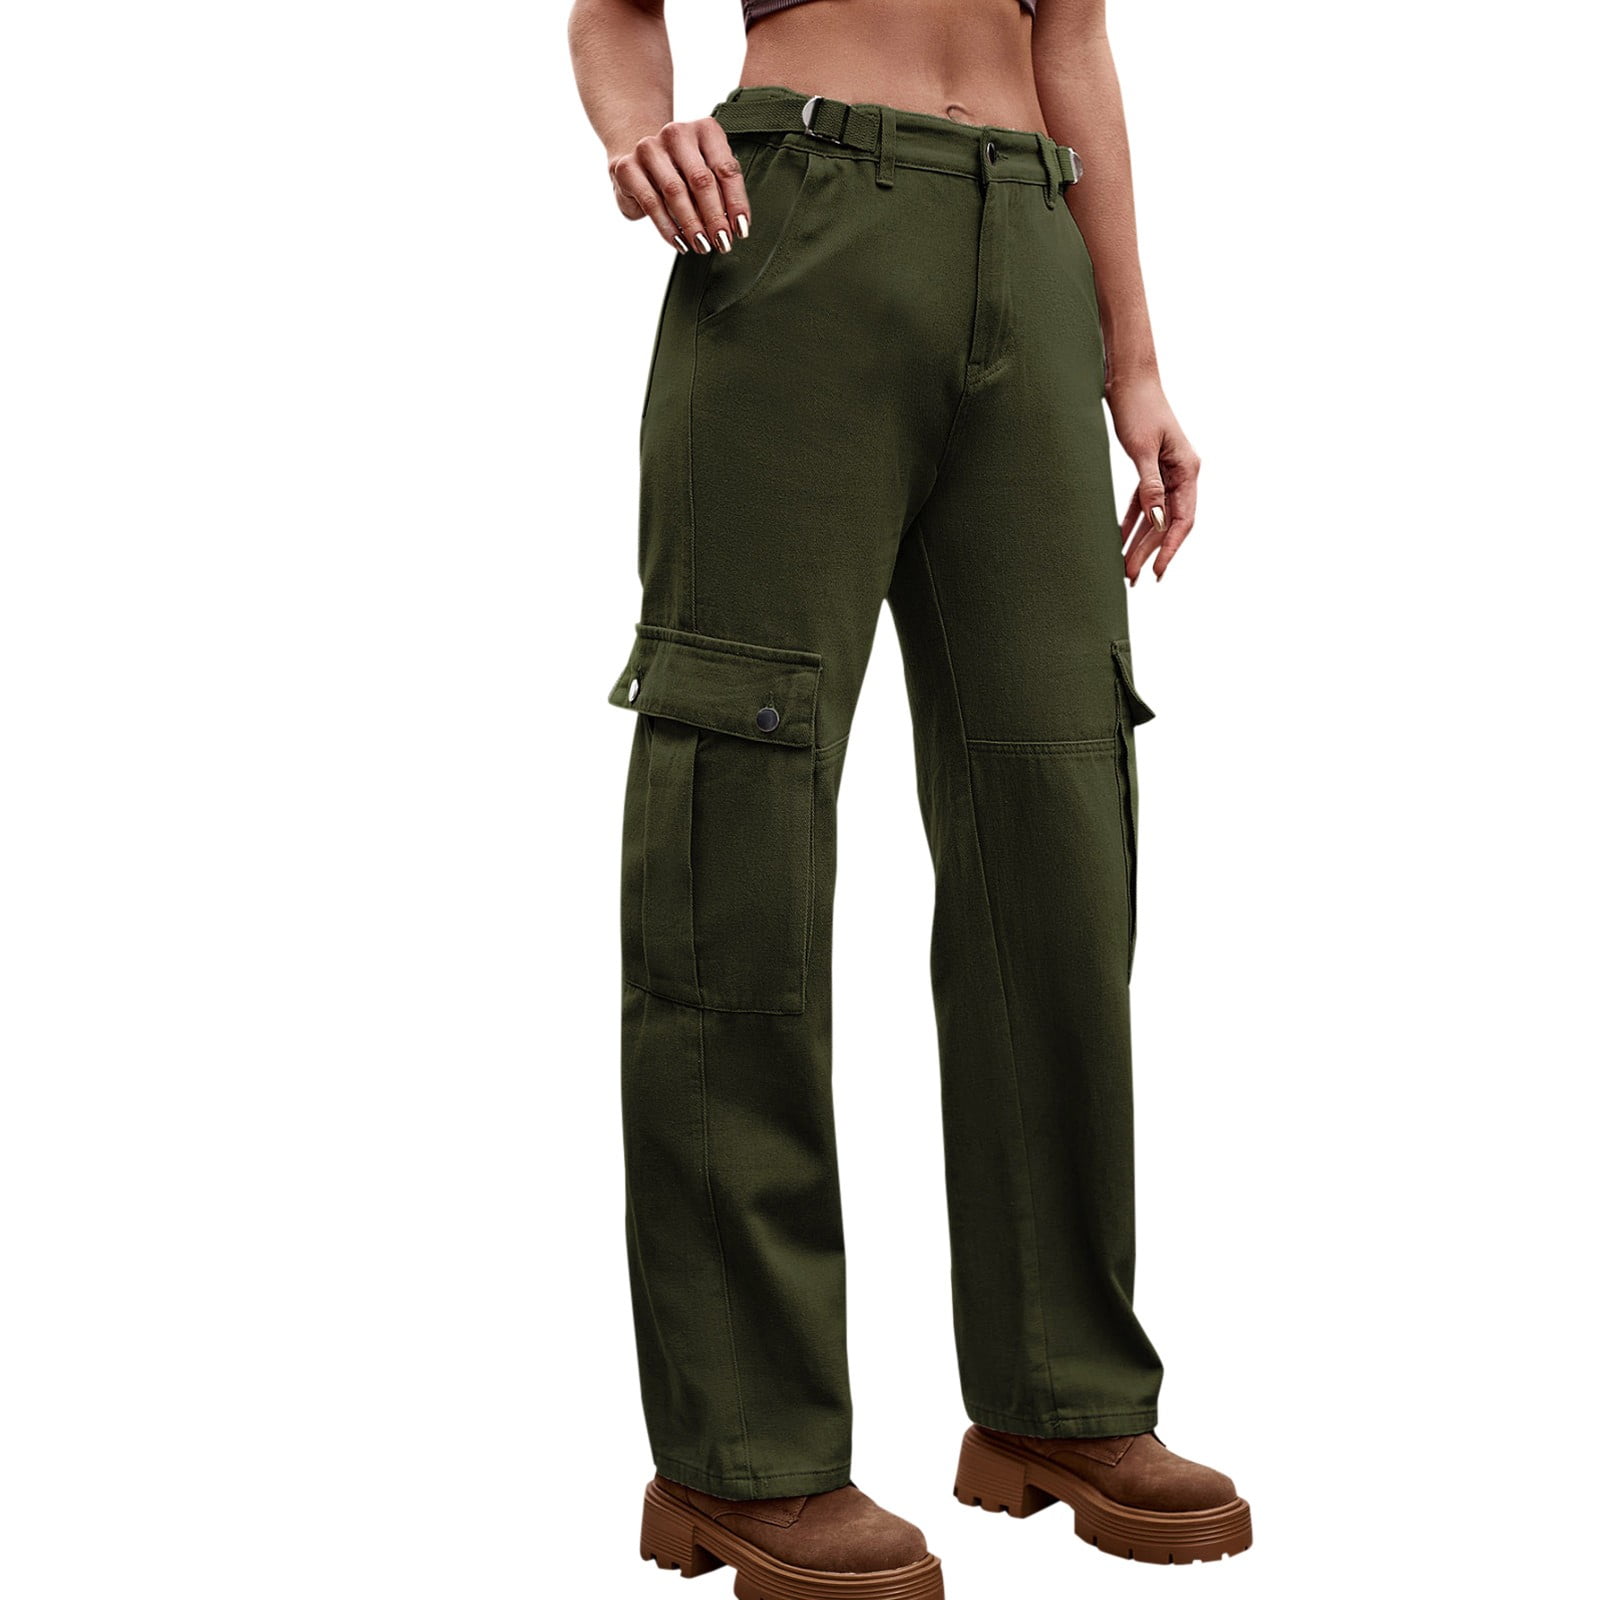 ON SALE!! Combat Cargo 4-Pocket Trousers High Waist Joggers Casual Pants  Bottom | eBay